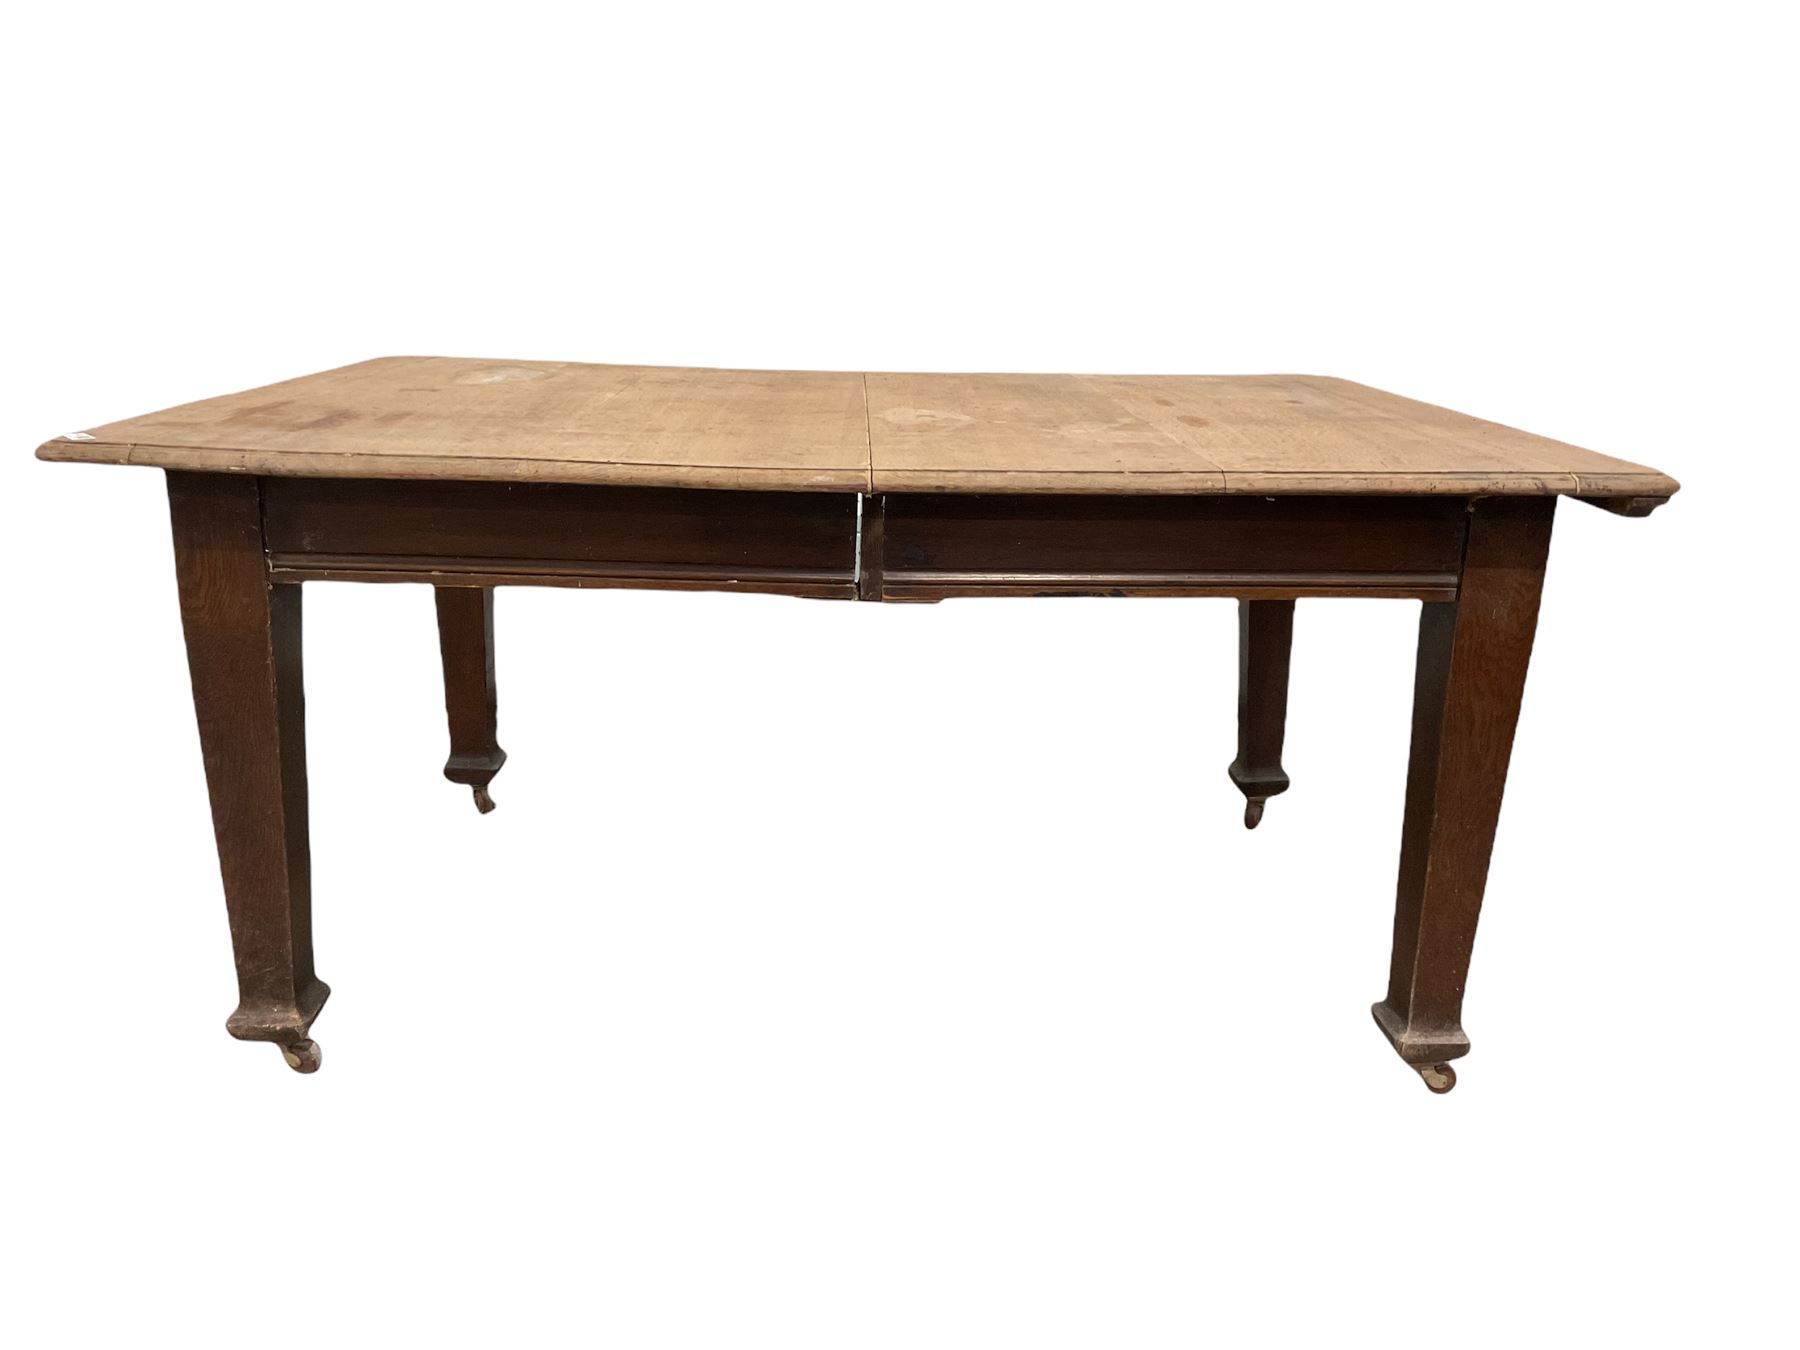 19th century oak dining table